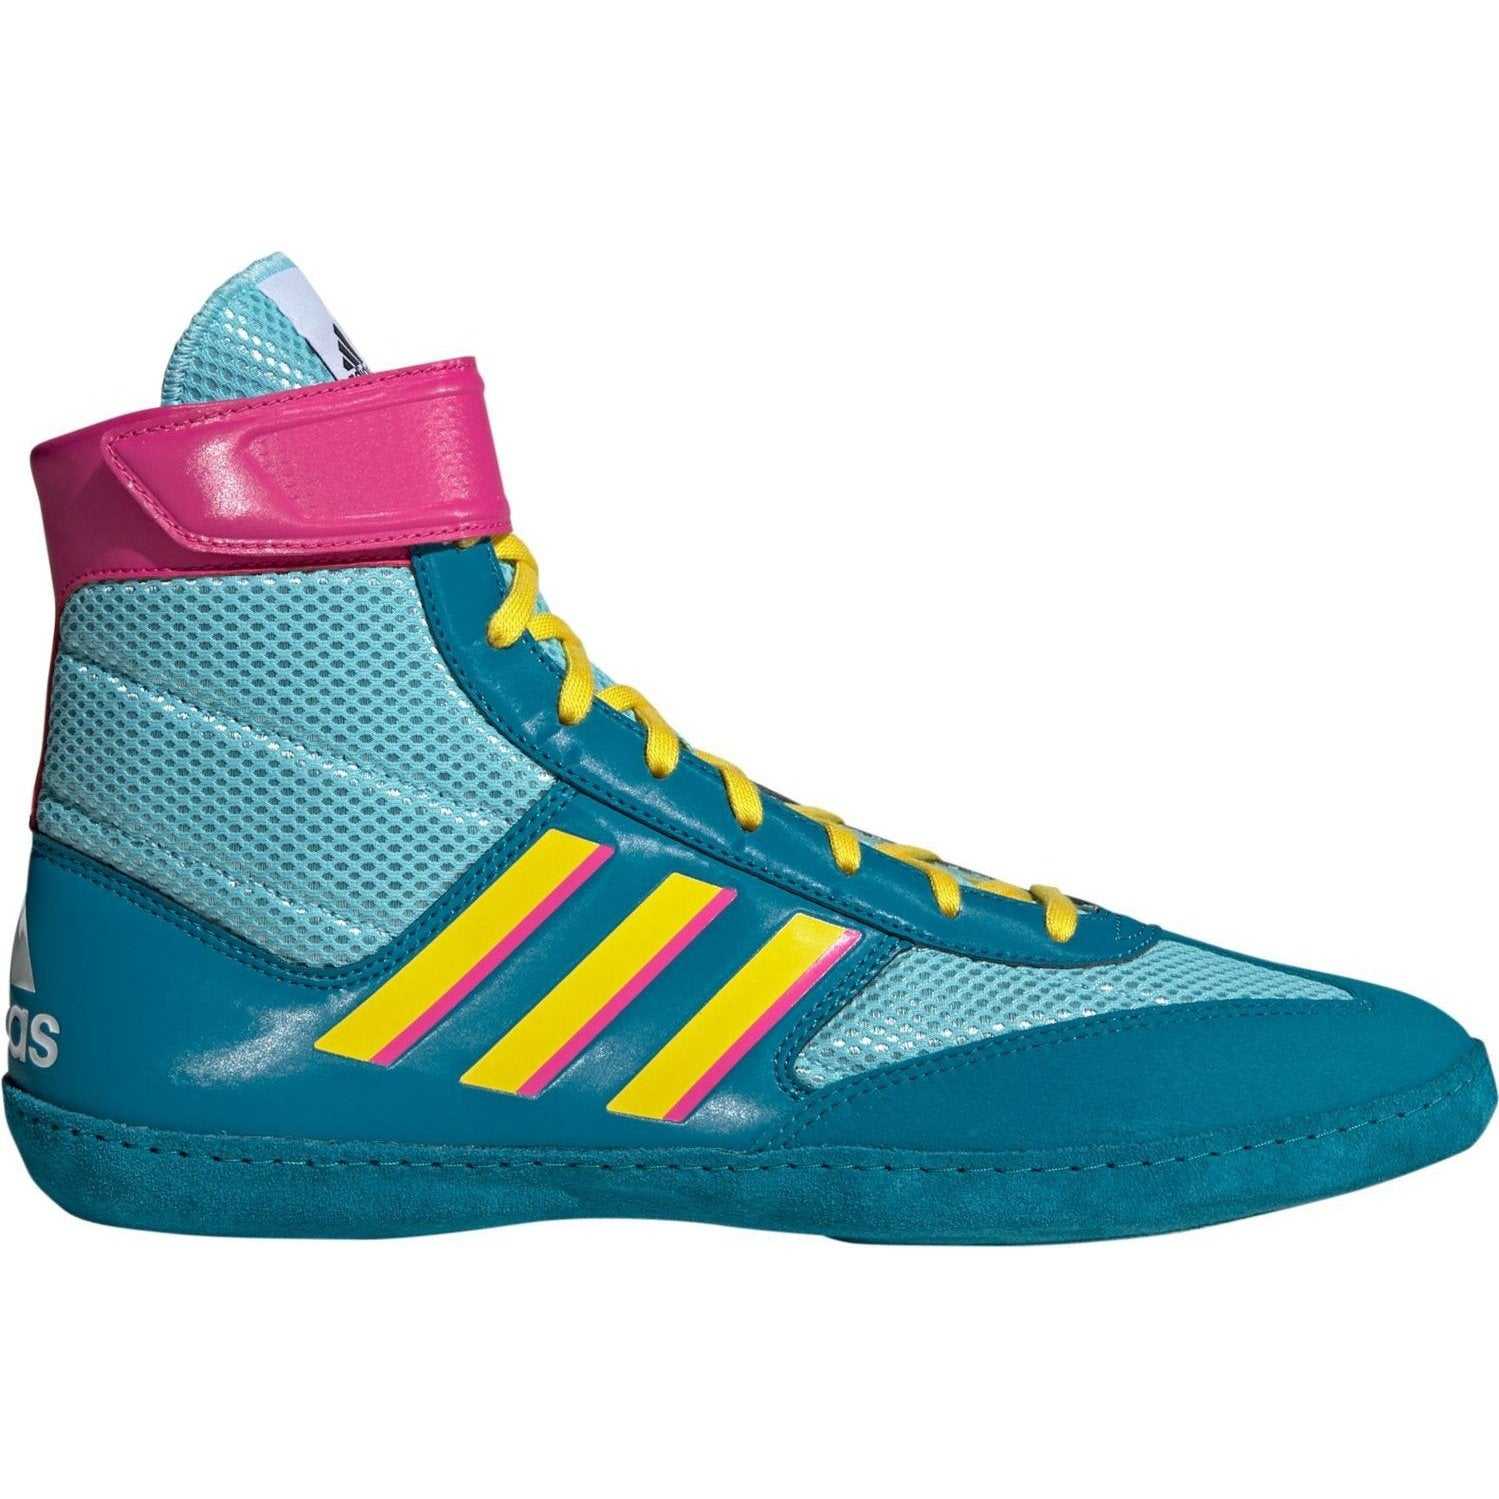 Adidas 224 Combat Speed 5 Wrestling Shoes - Aqua Yellow Teal